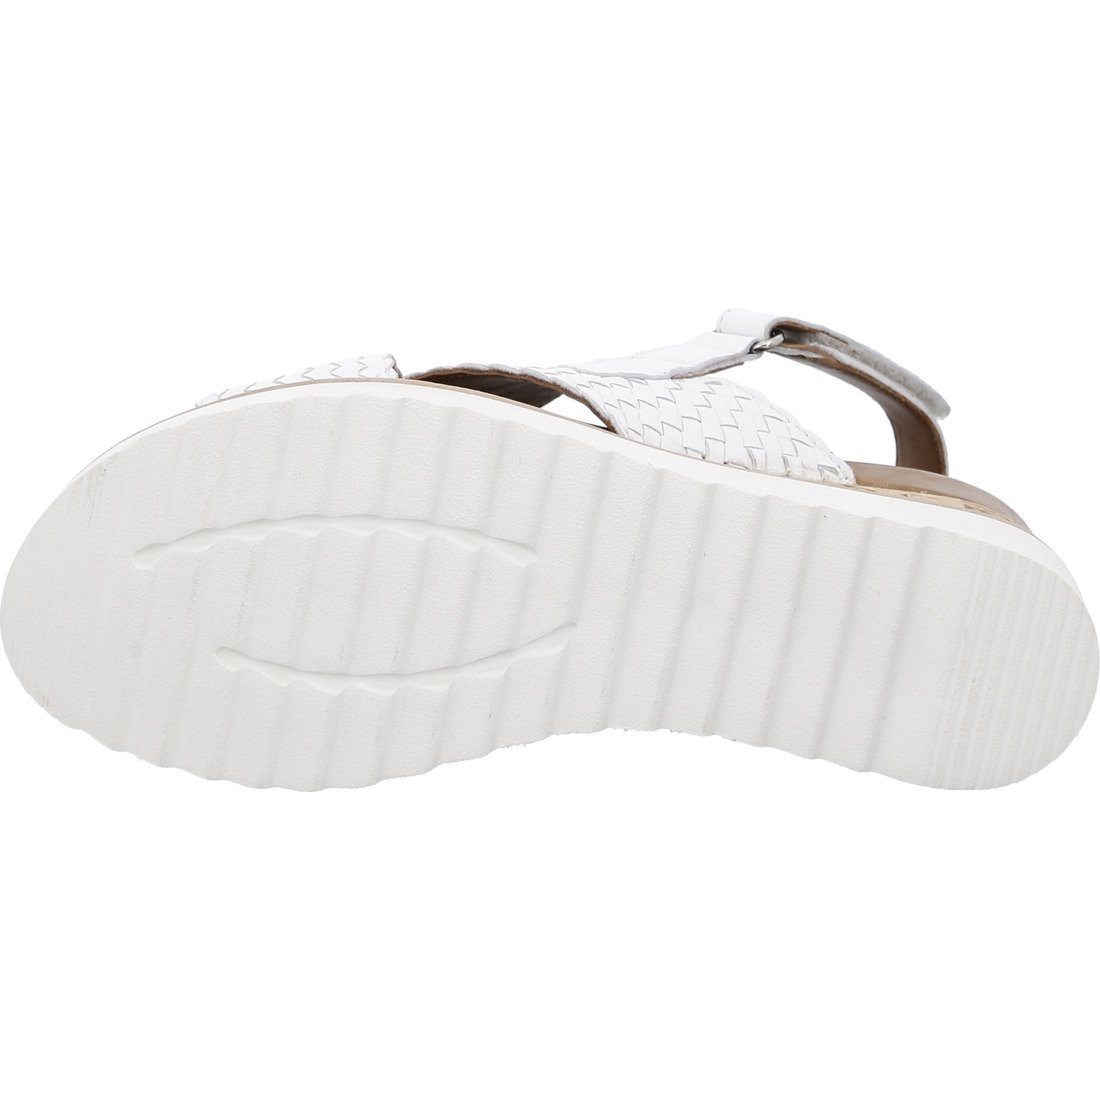 Ara Sandalette Schuhe, - Damen Leder Sandalette Valencia Ara weiß 045298